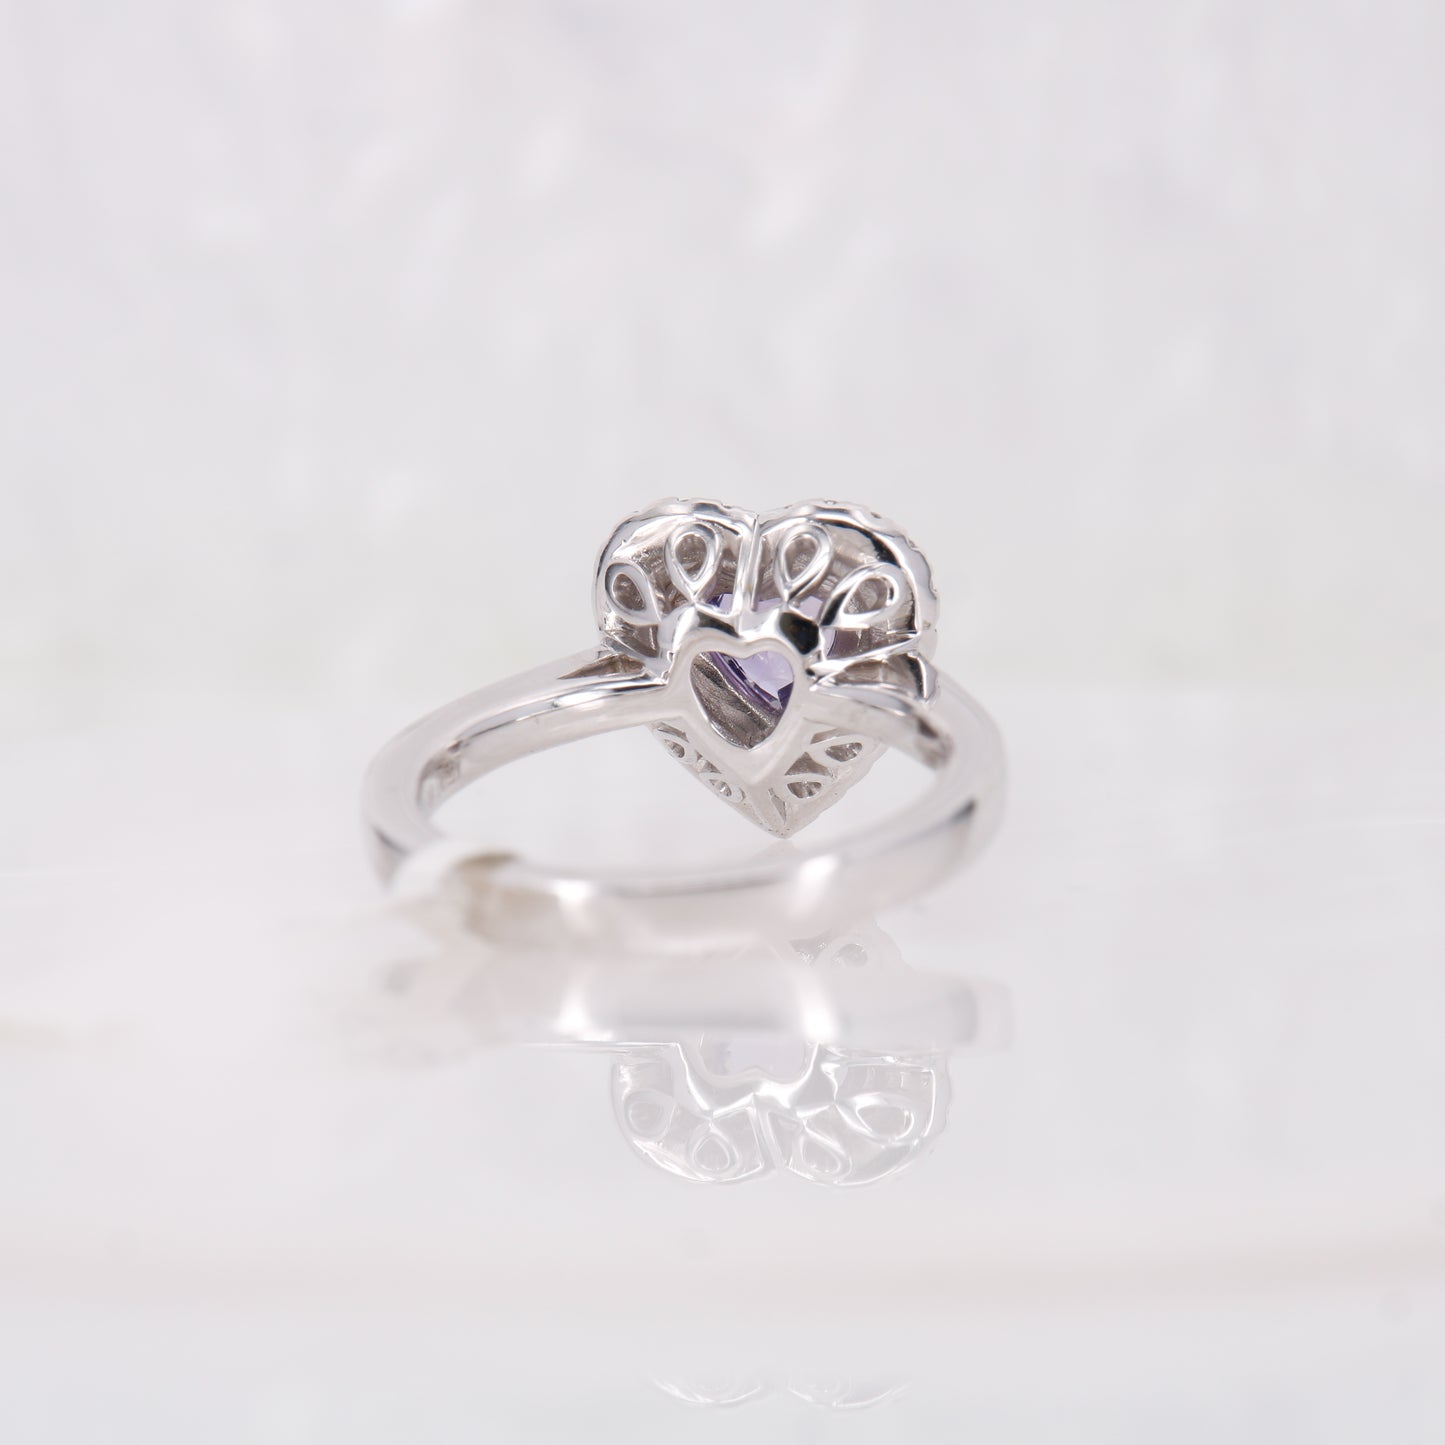 Purple Heart Cut Sapphire and Diamond Ring. Double Halo of diamonds. 